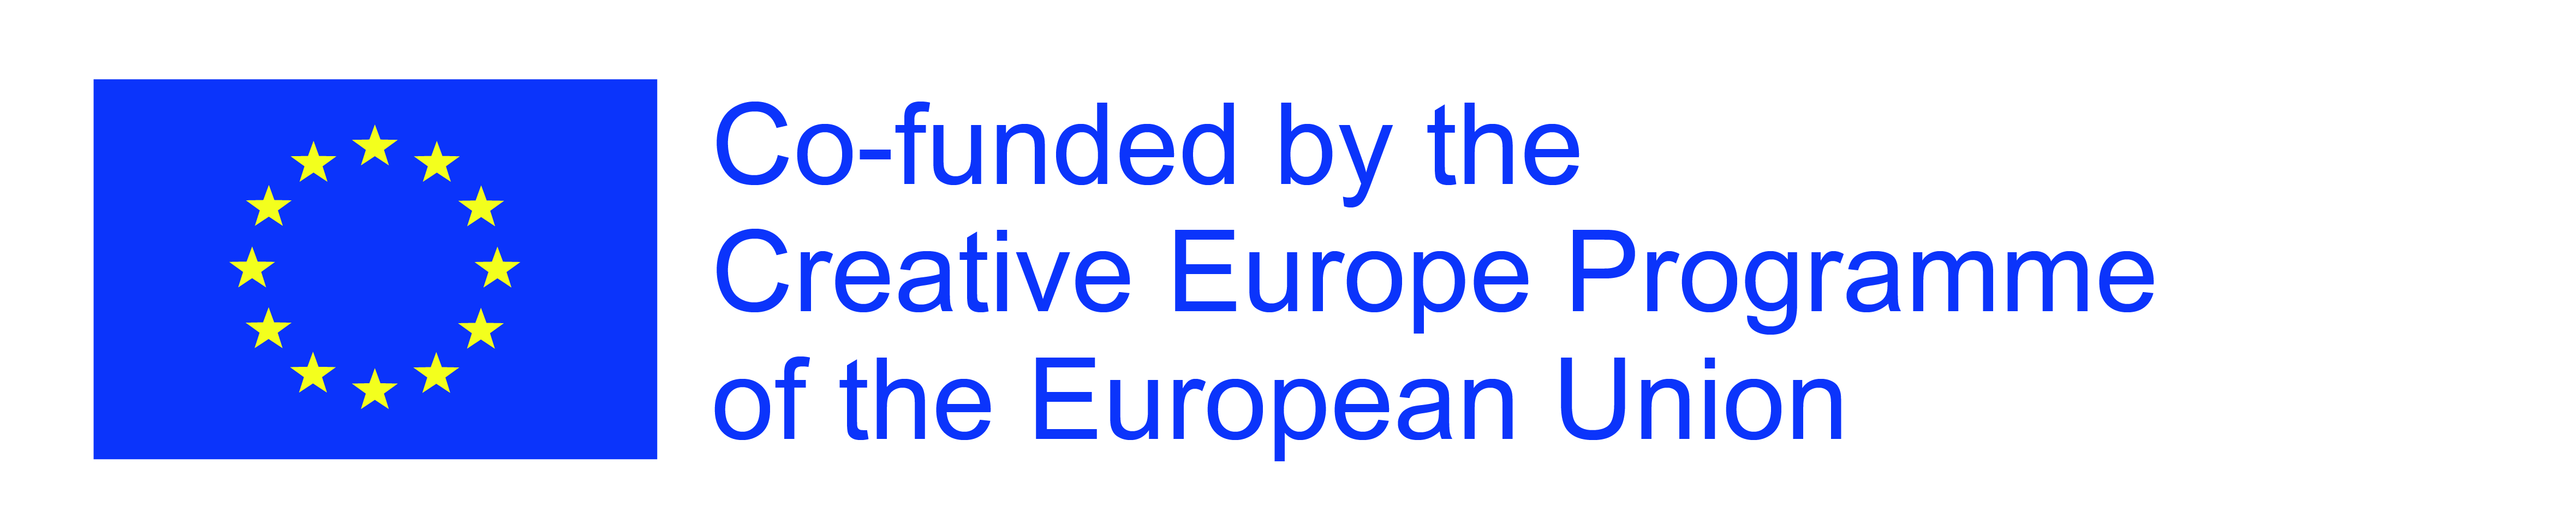 EU Creative Europe Program